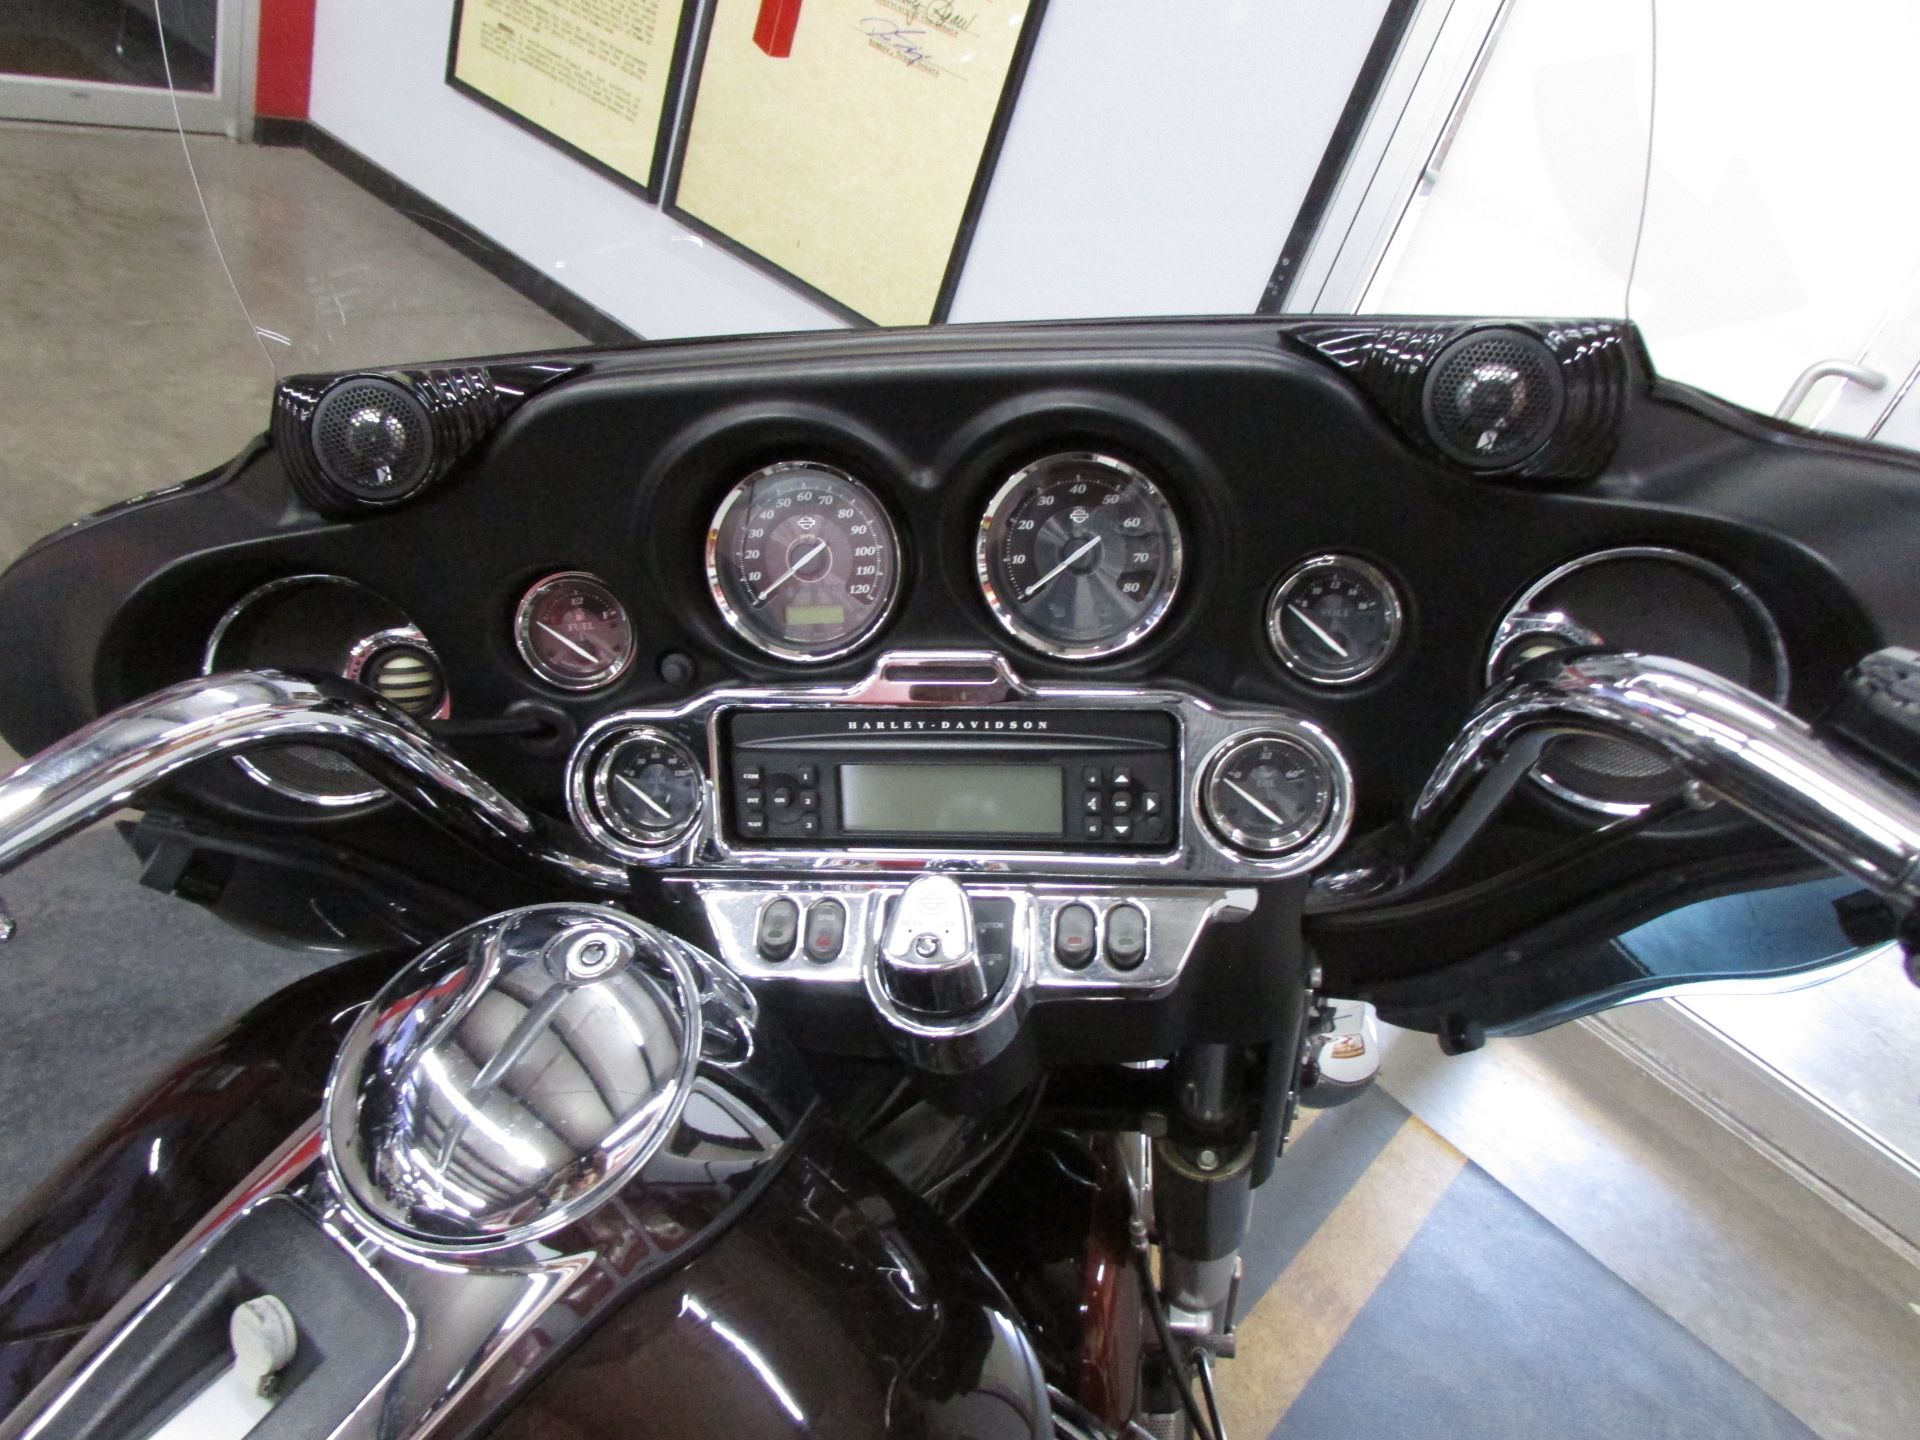 2011 Harley-Davidson Electra Glide® Ultra Limited in Wichita Falls, Texas - Photo 11